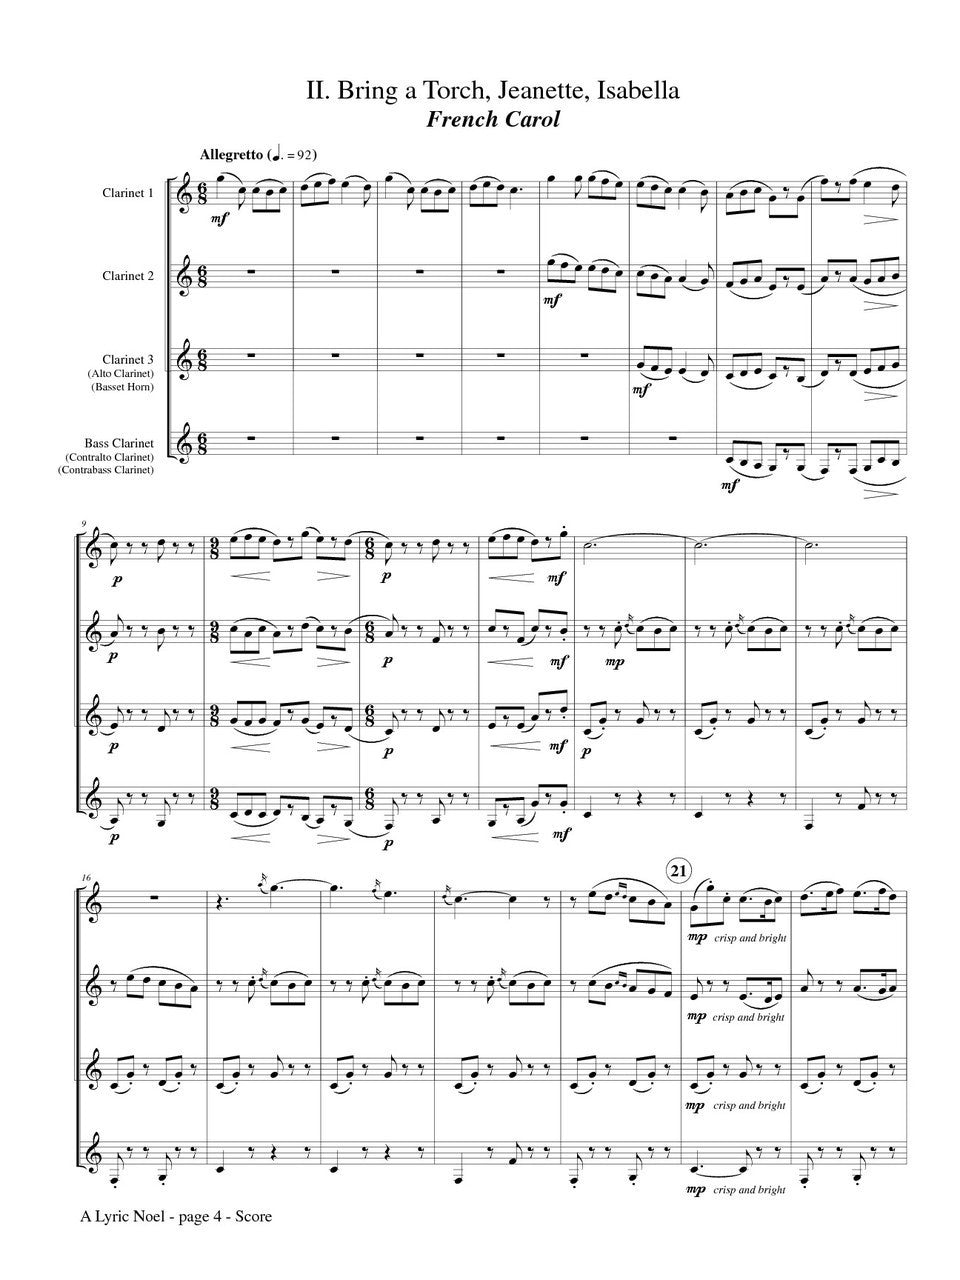 McMichael - A Lyric Noel for Clarinet Quartet